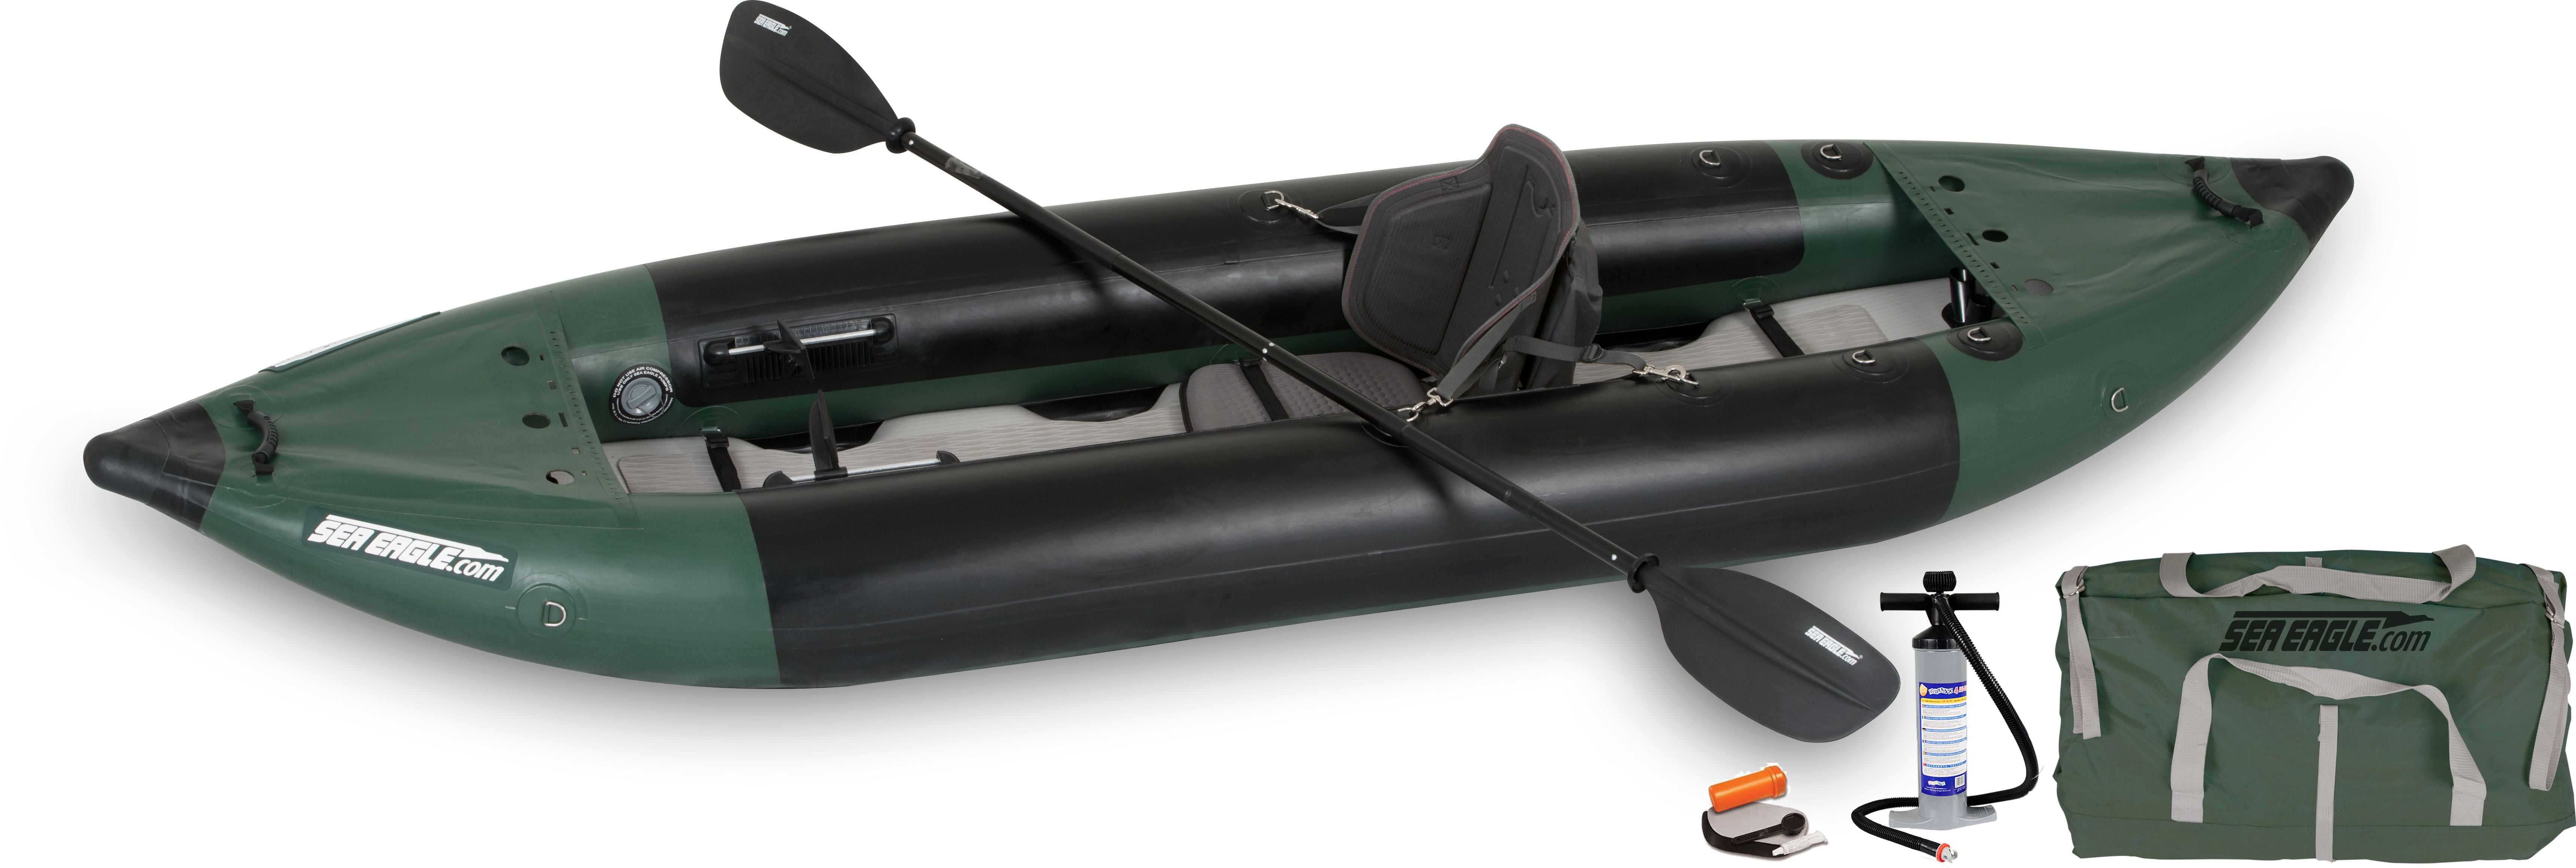 Sea Eagle 350fx Inflatable Fishing Explorer Kayak Pro Solo Package